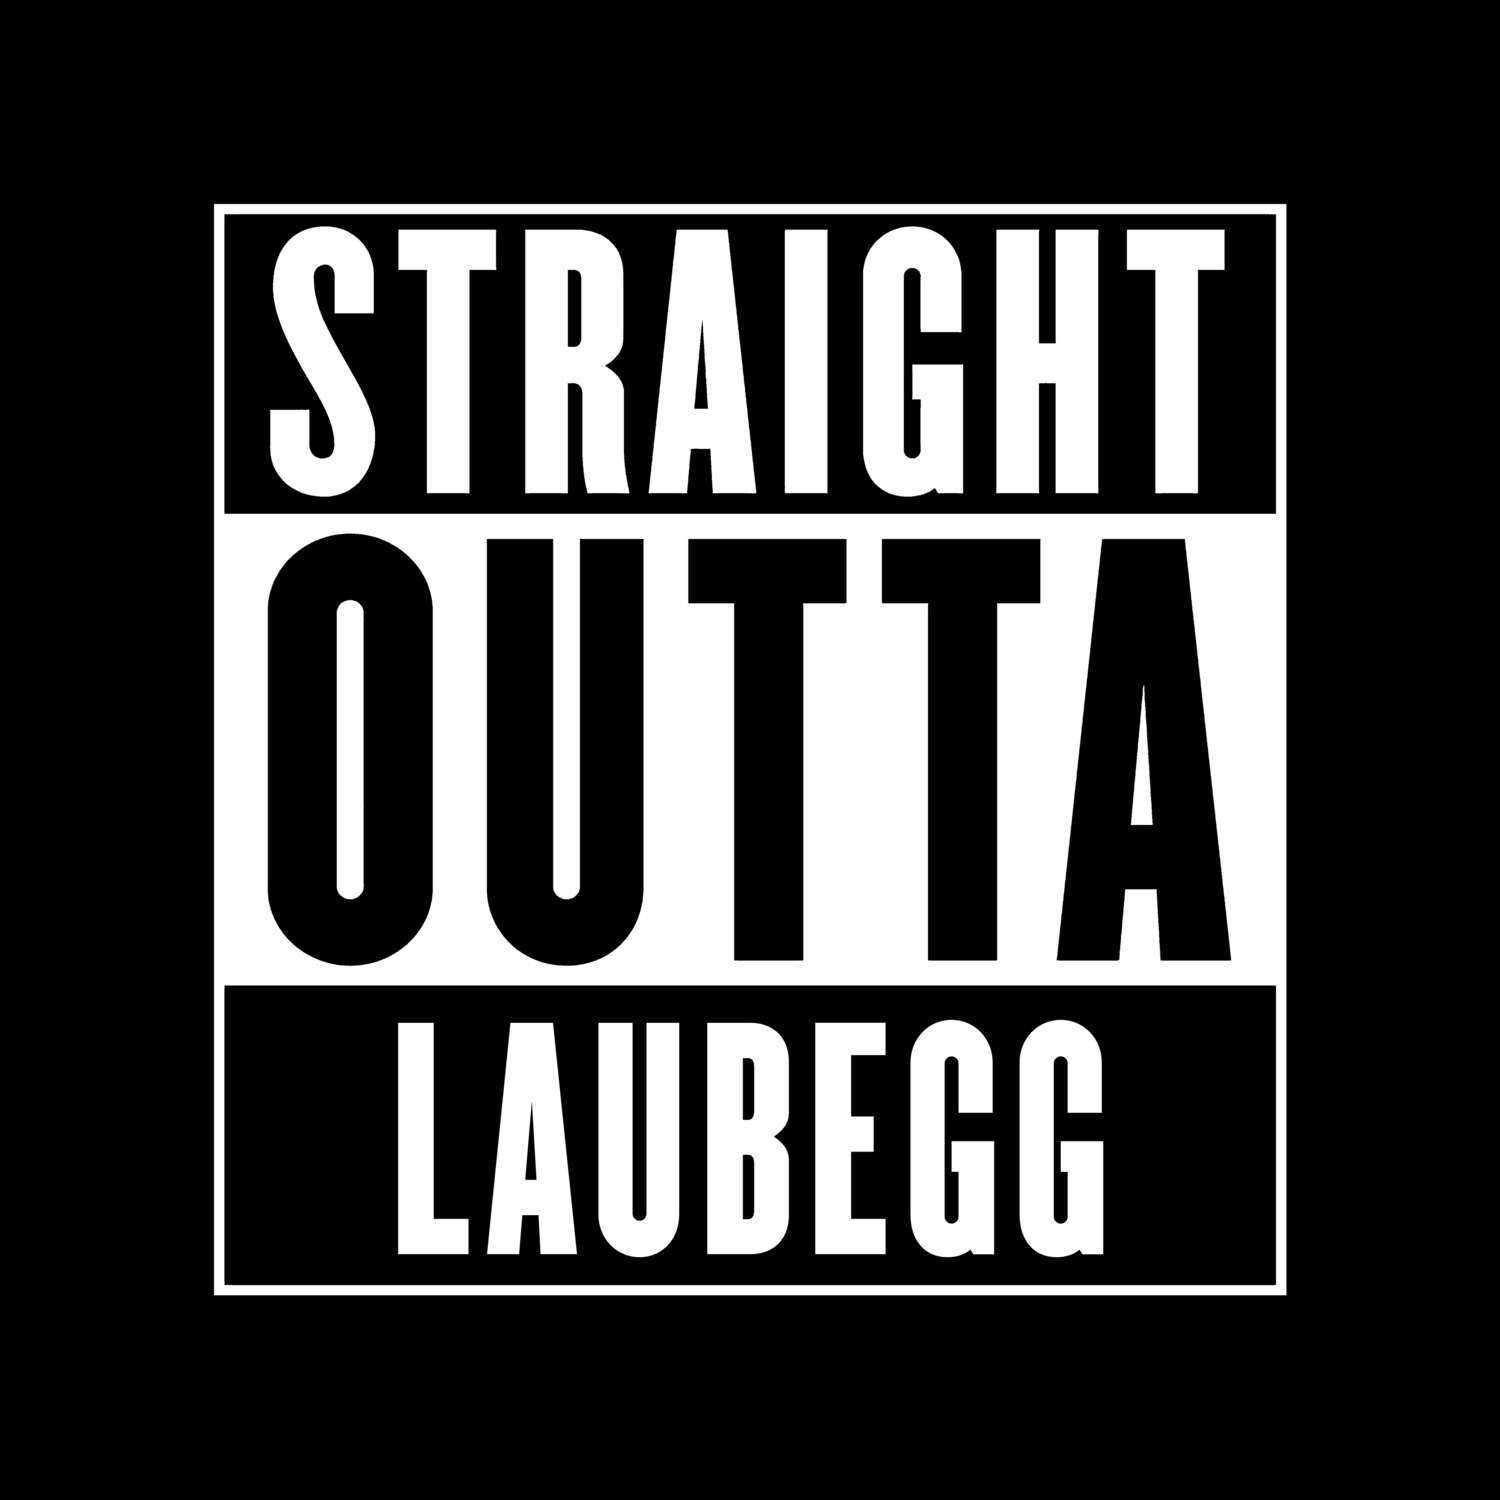 Laubegg T-Shirt »Straight Outta«